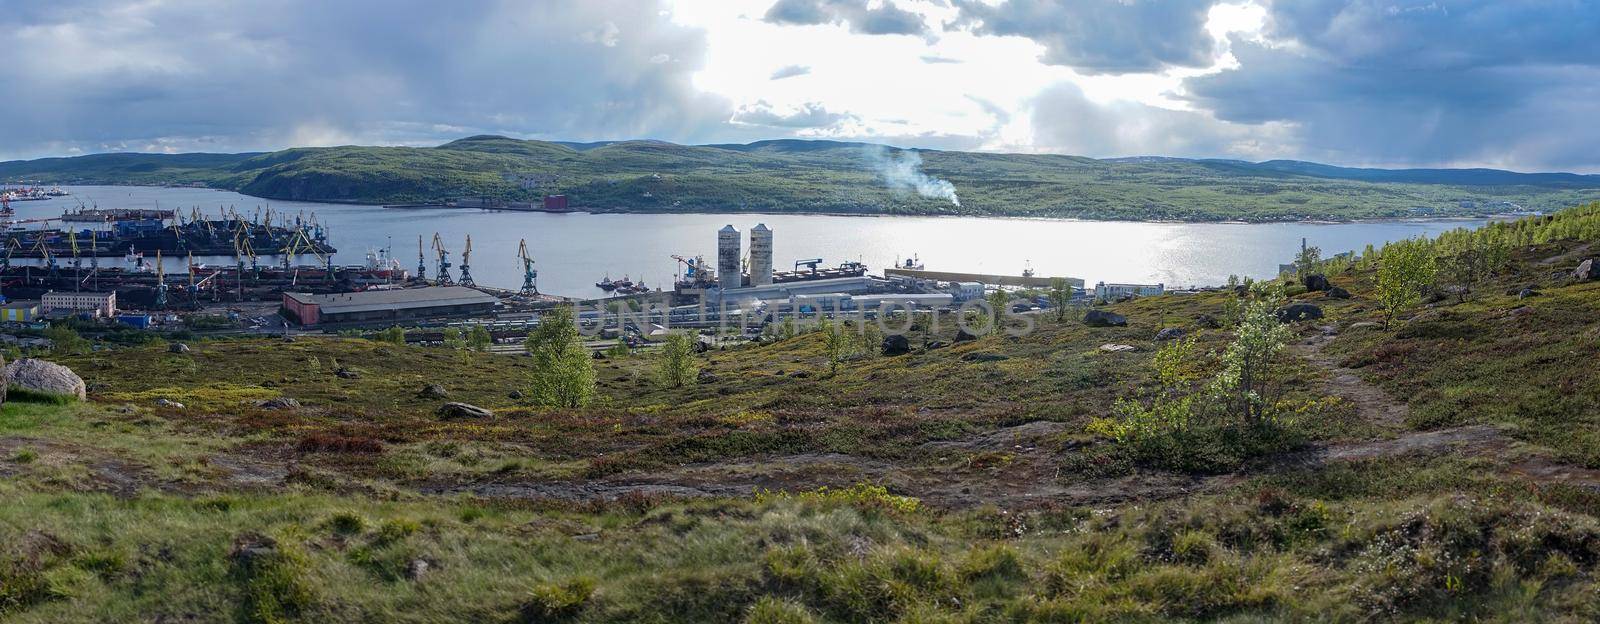 Murmansk, Russia. Industrial landscape on the shore of the Kola Bay.